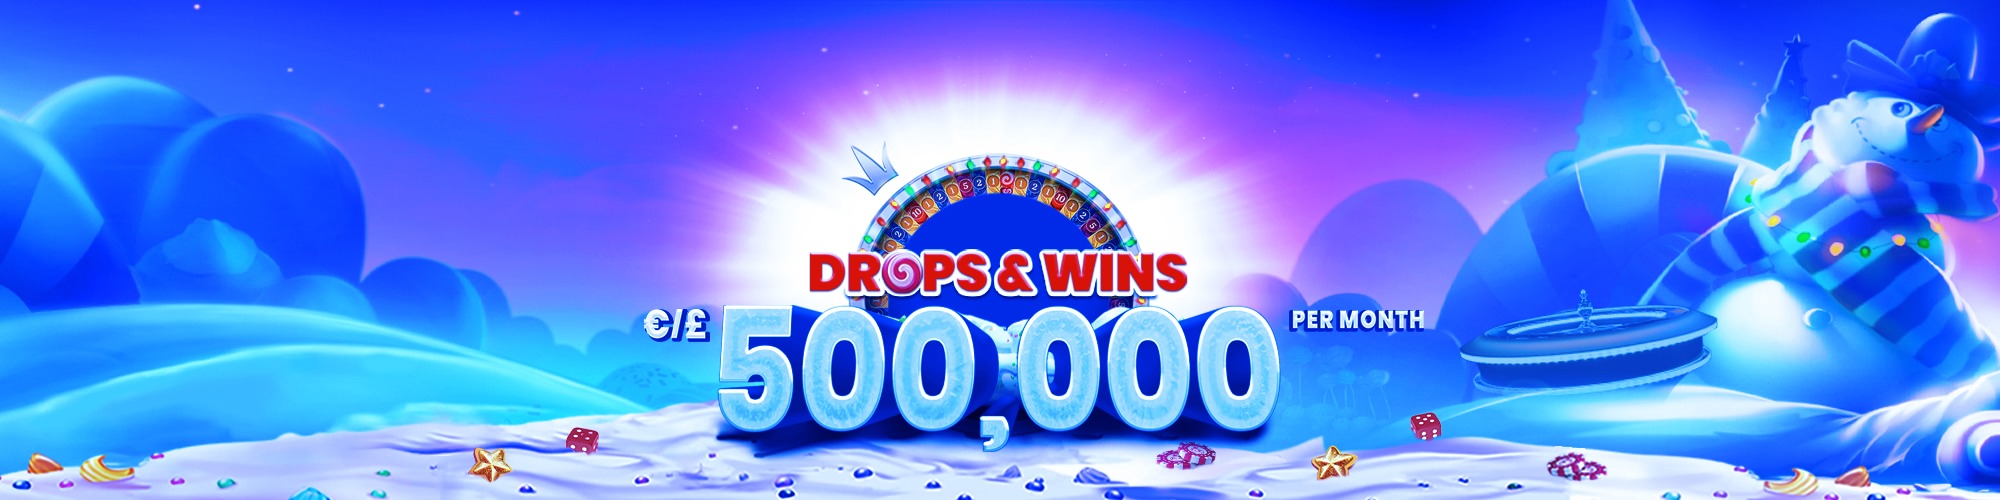 Drops-&.wins-winter-top-banner 2000x500-3